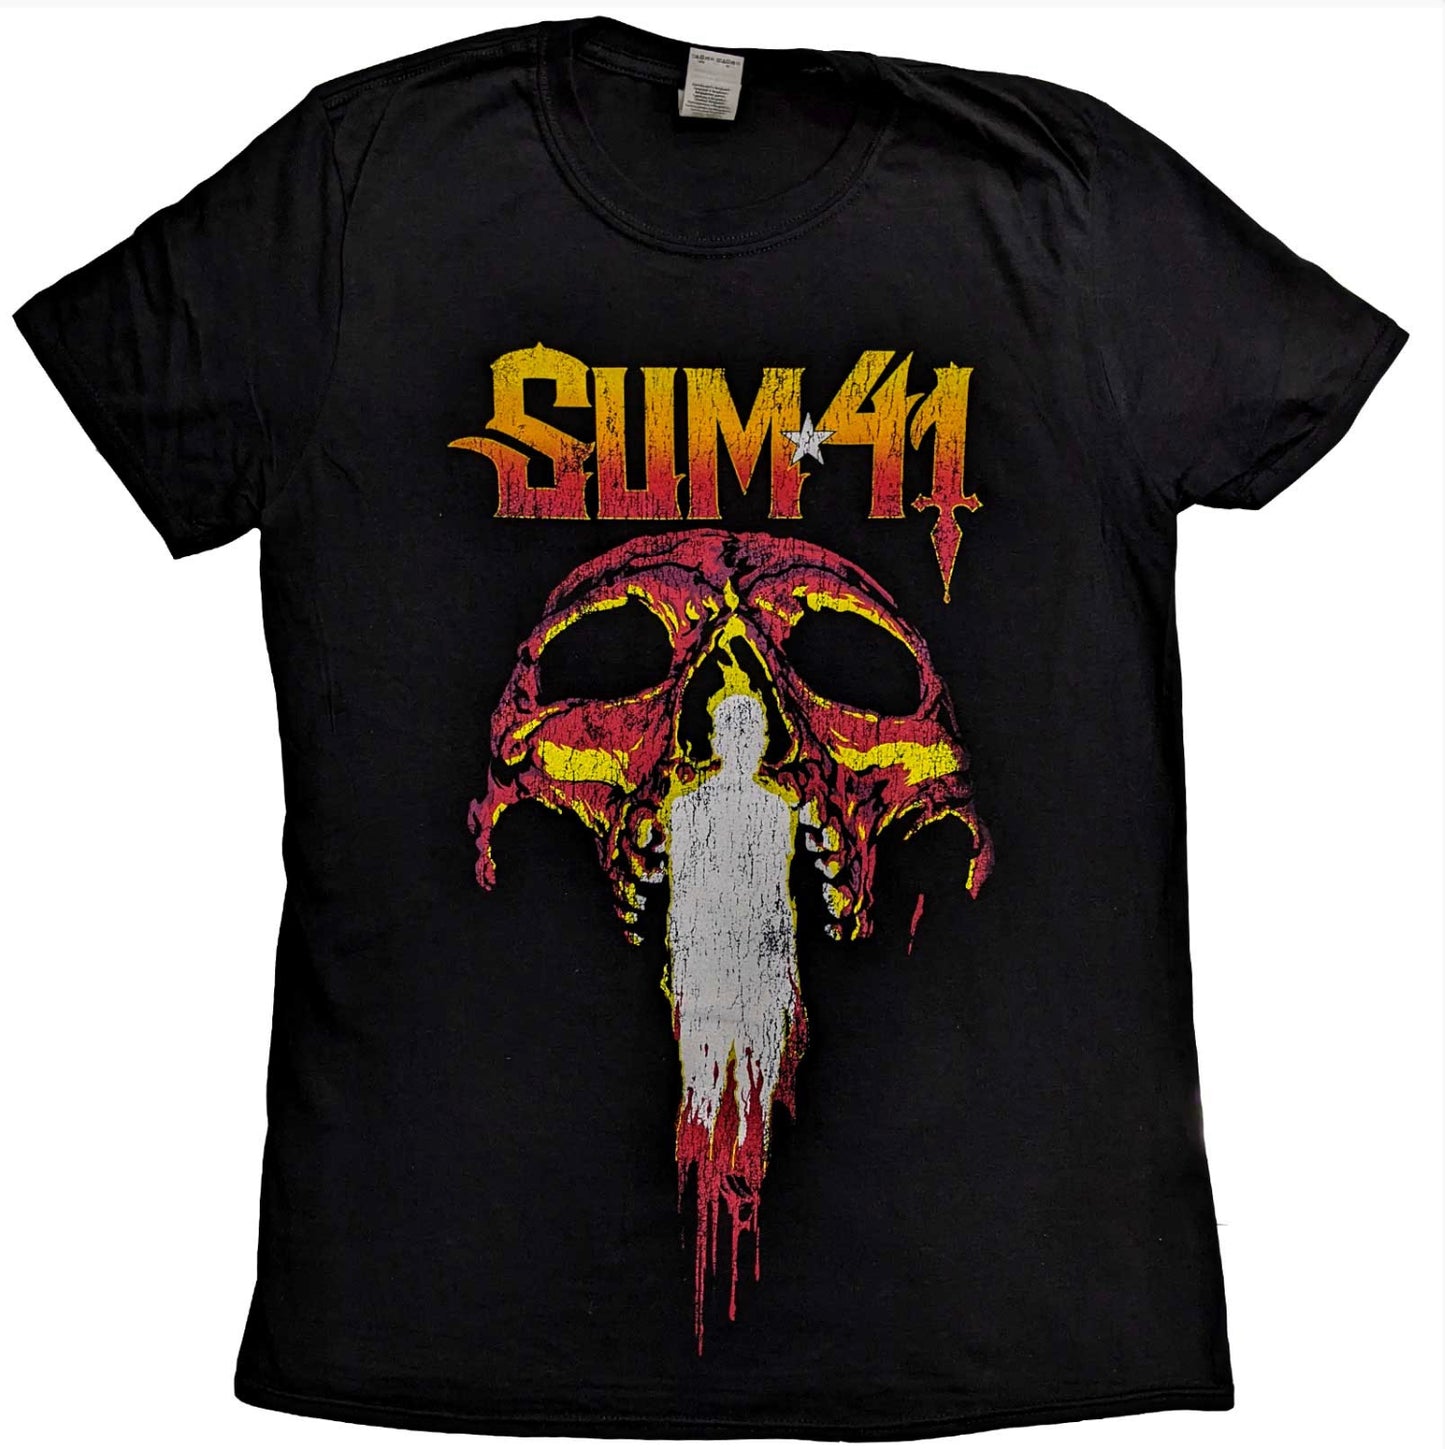 Sum 41 T-shirts